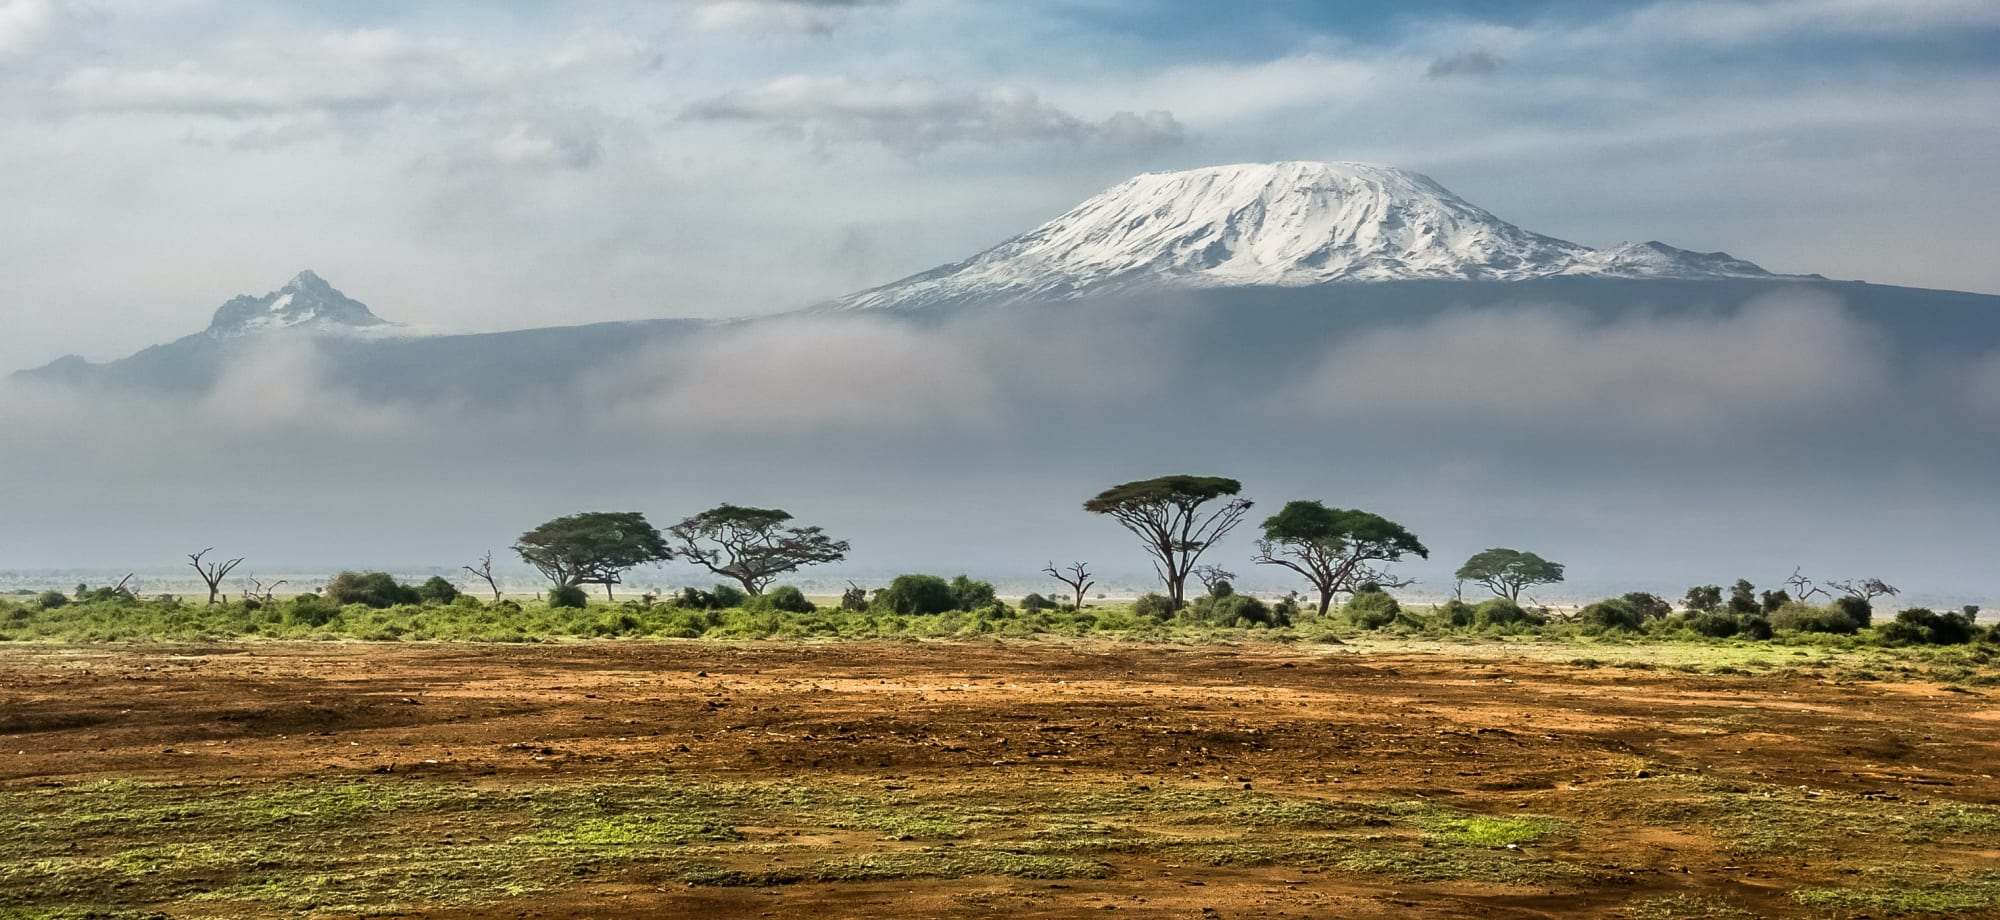 Mt_Kilimanjaro_Tanzania_Unsplash_CCSergey_Pesterev_fhkqv0